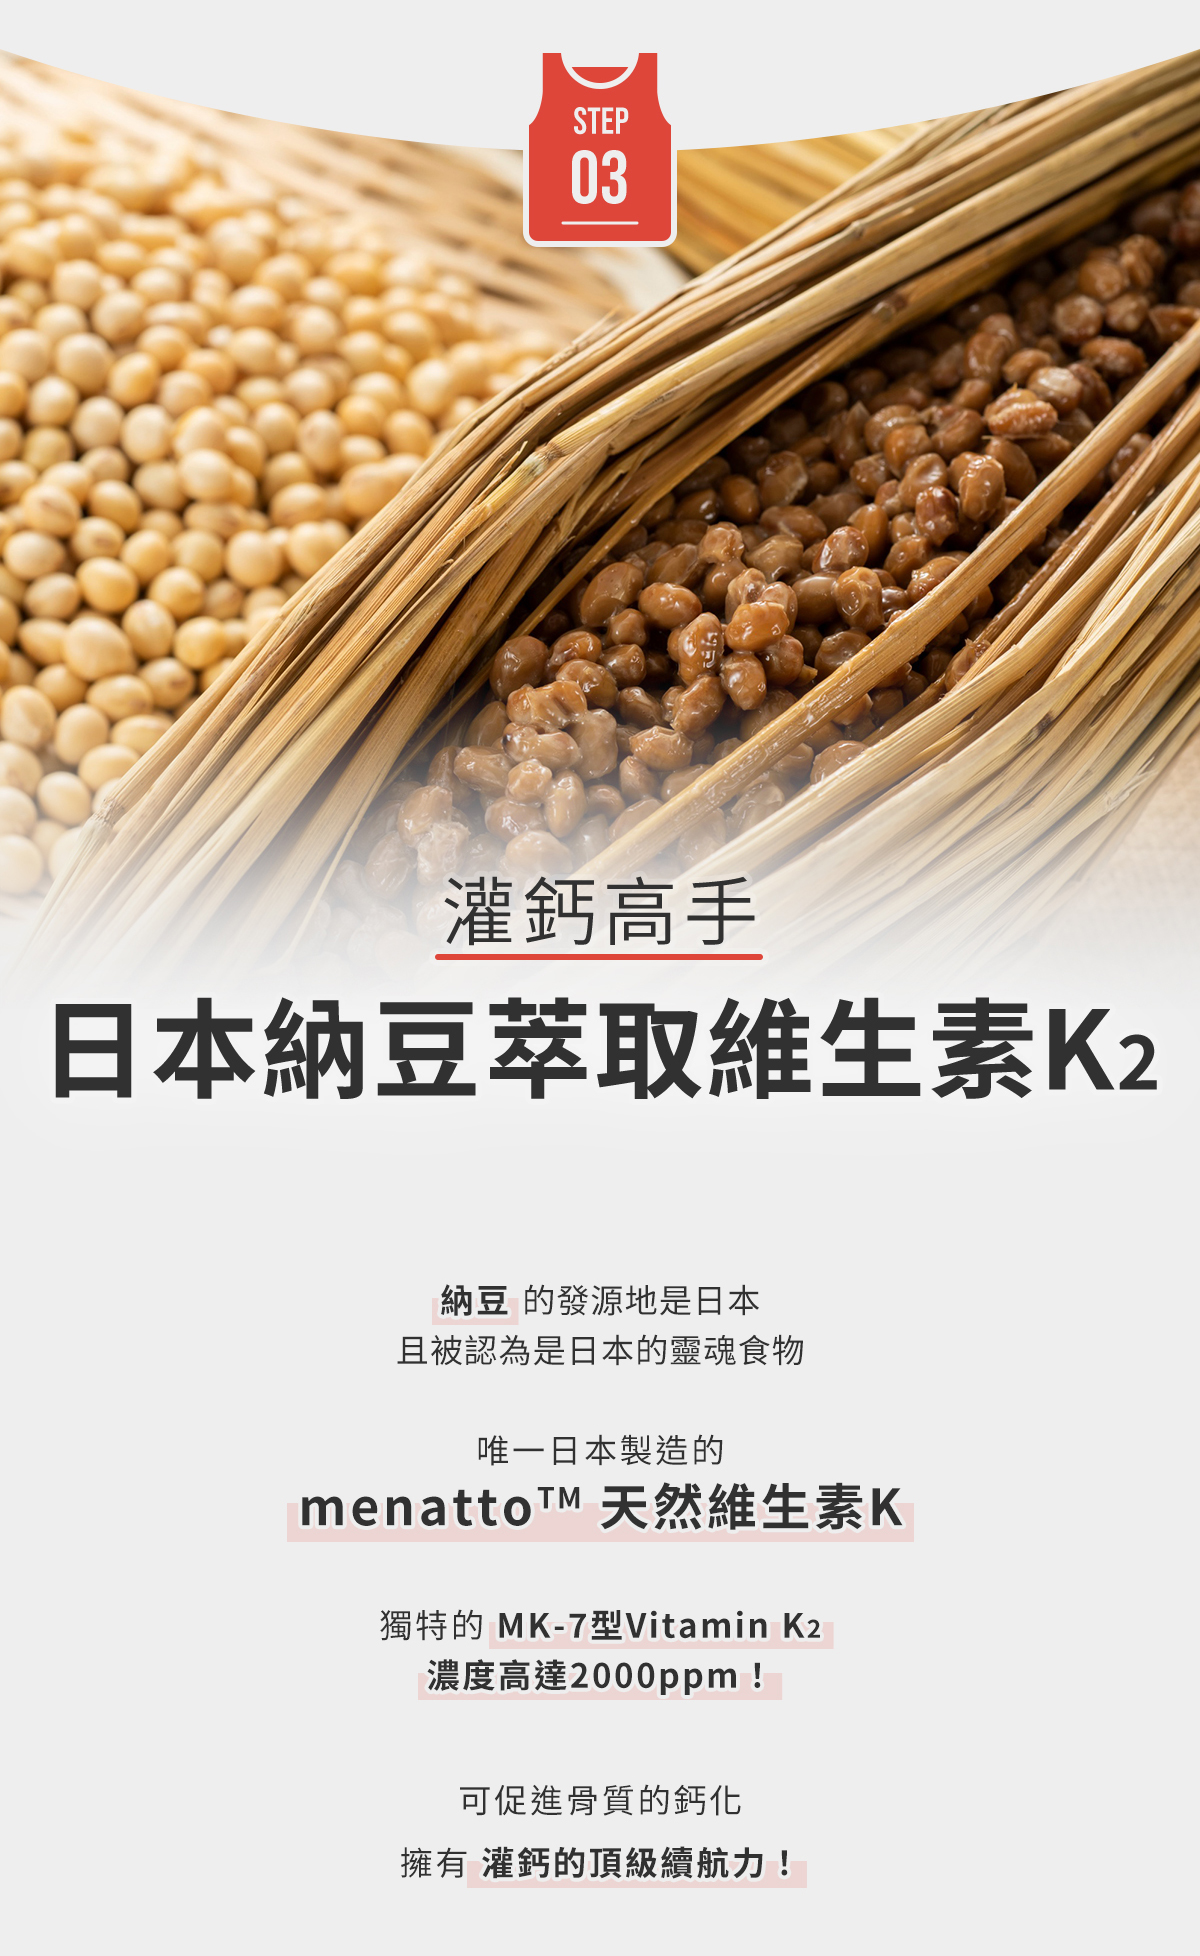 STEP3-灌鈣高手，日本納豆萃取維生素K2：menattoTM 天然維生素K，獨特的 MK-7型Vitamin K2，濃度高達2000ppm！可促進骨質的鈣化，擁有灌鈣的頂級續航力！